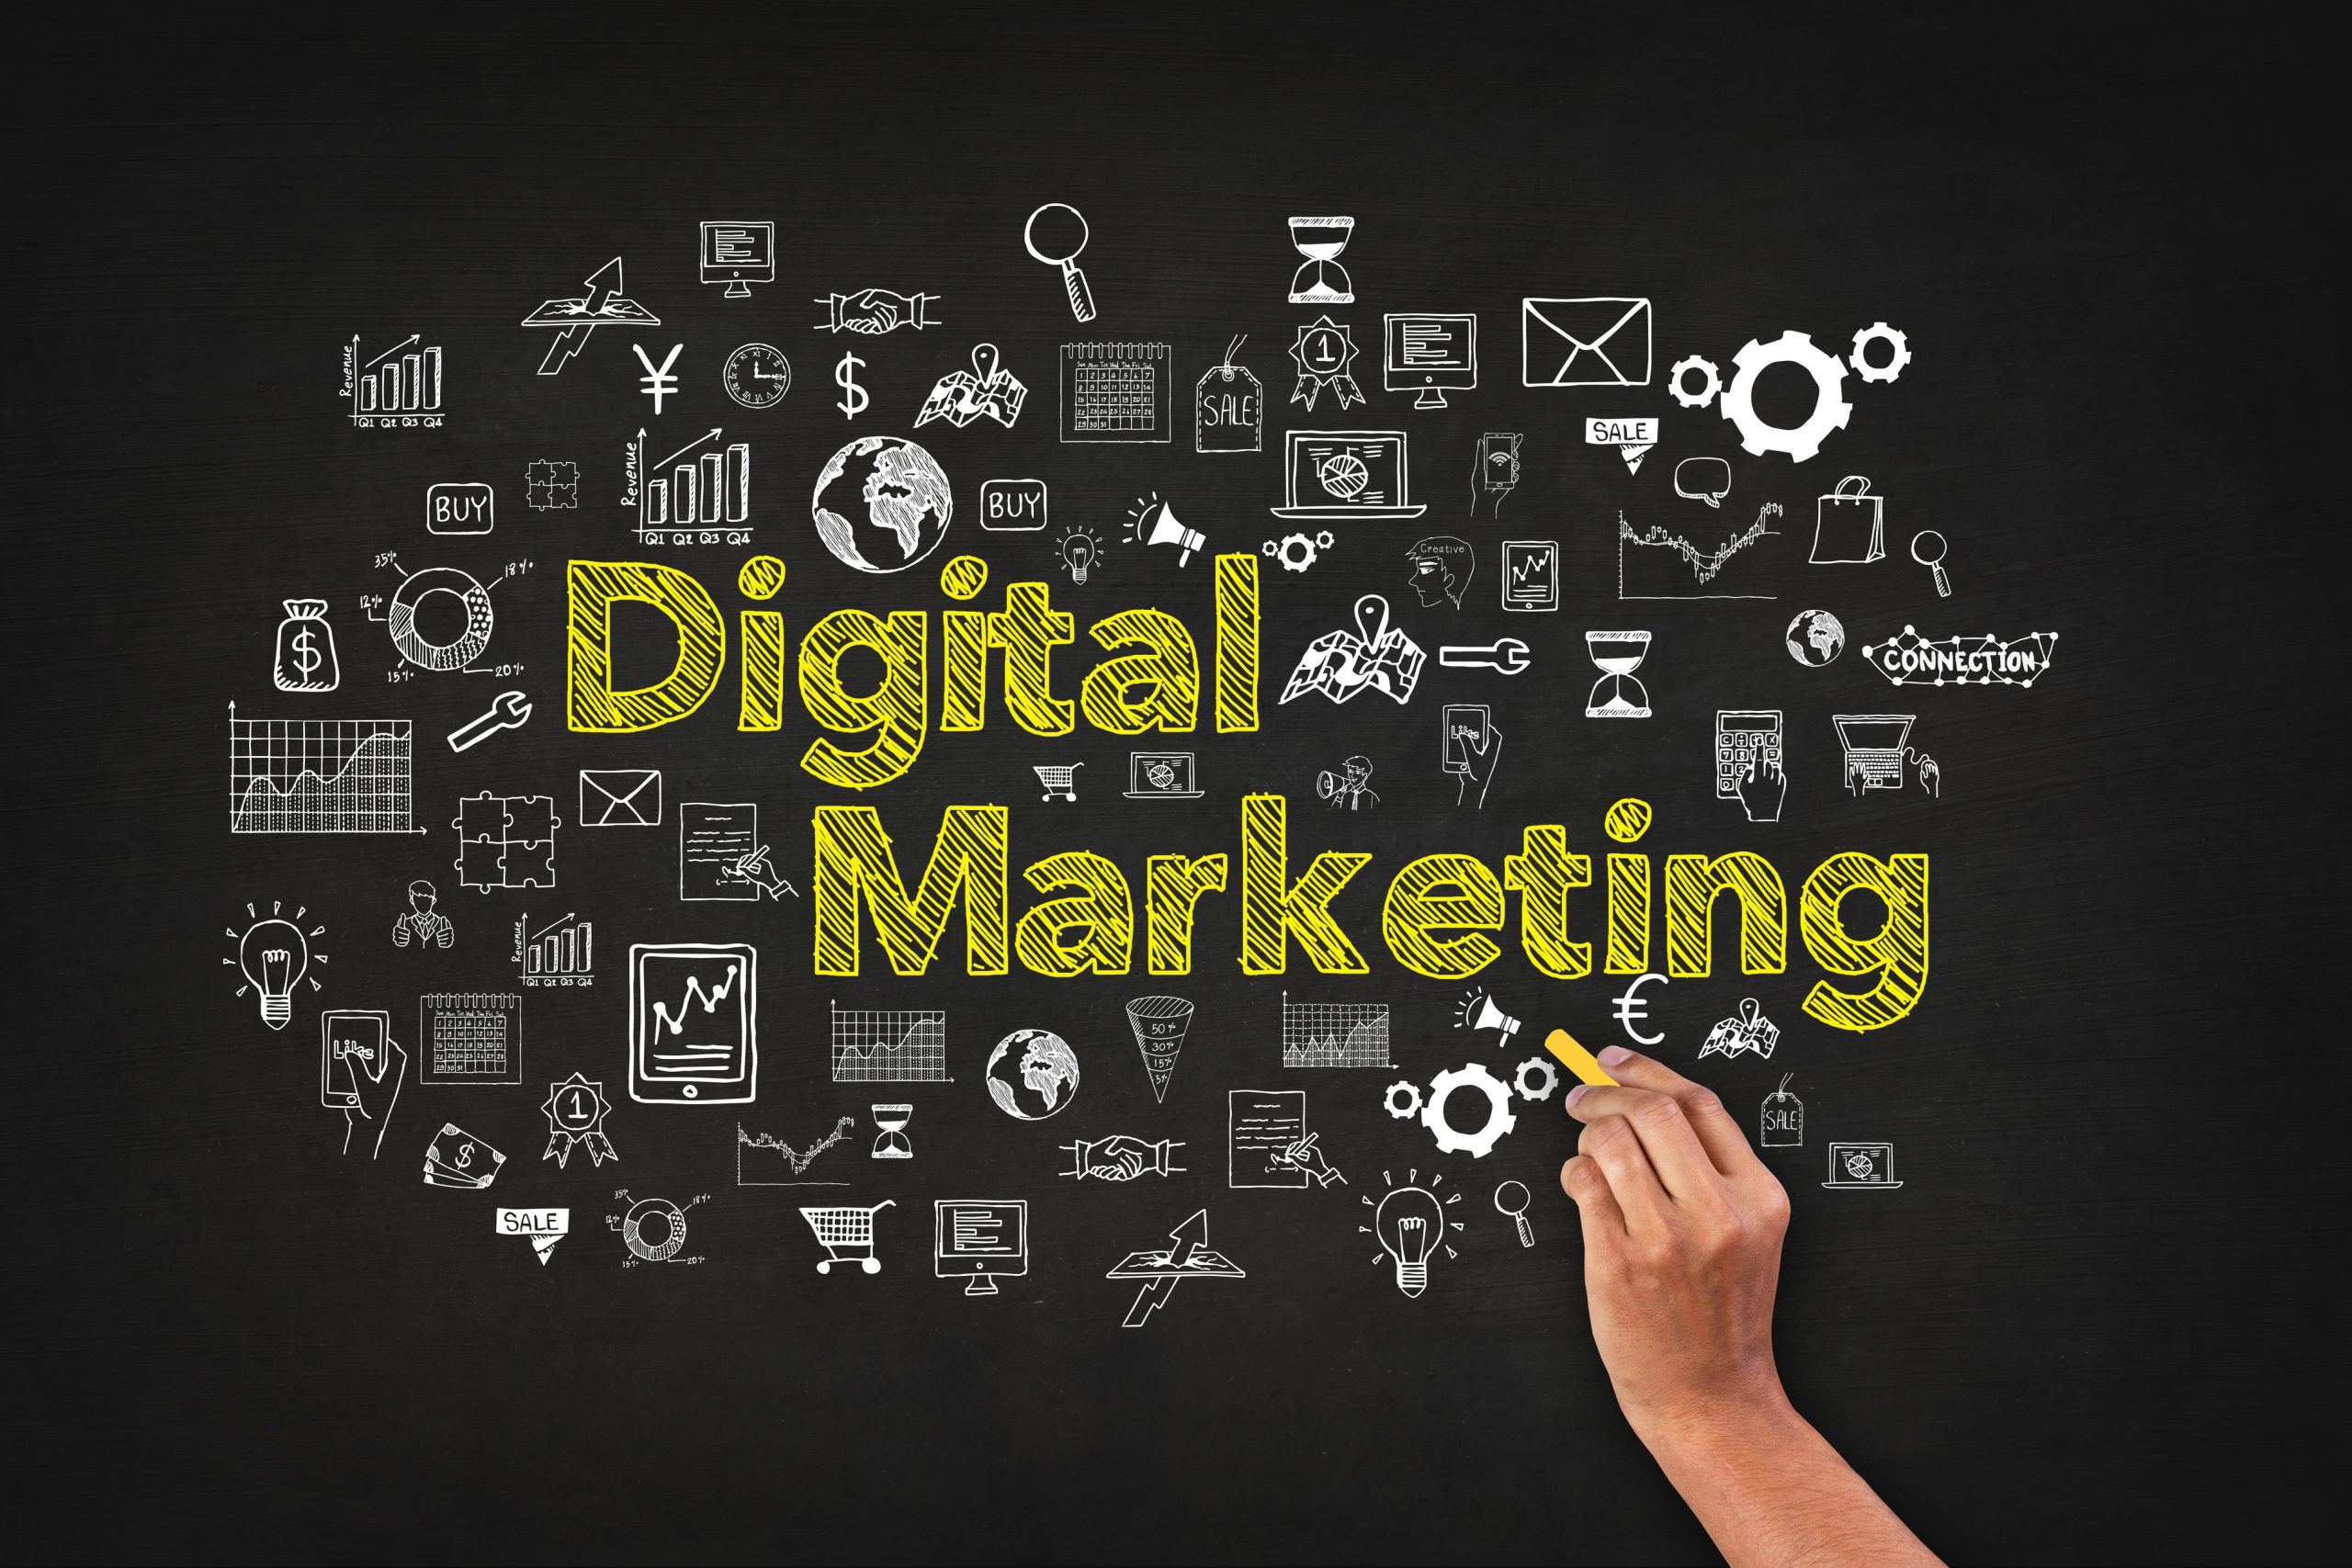 Digital Marketing services in Pakistan